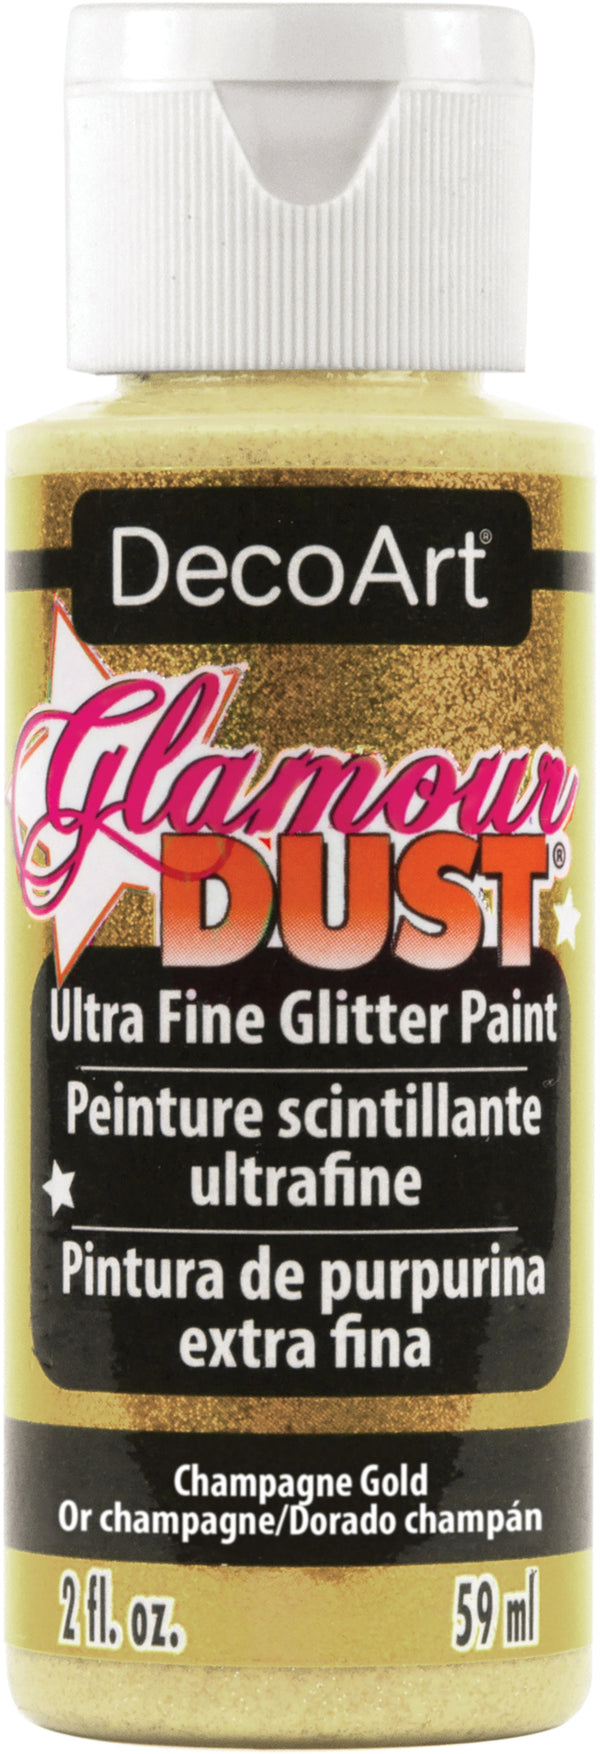 DecoArt Glamour Dust Glitter Paint 2oz - Champagne